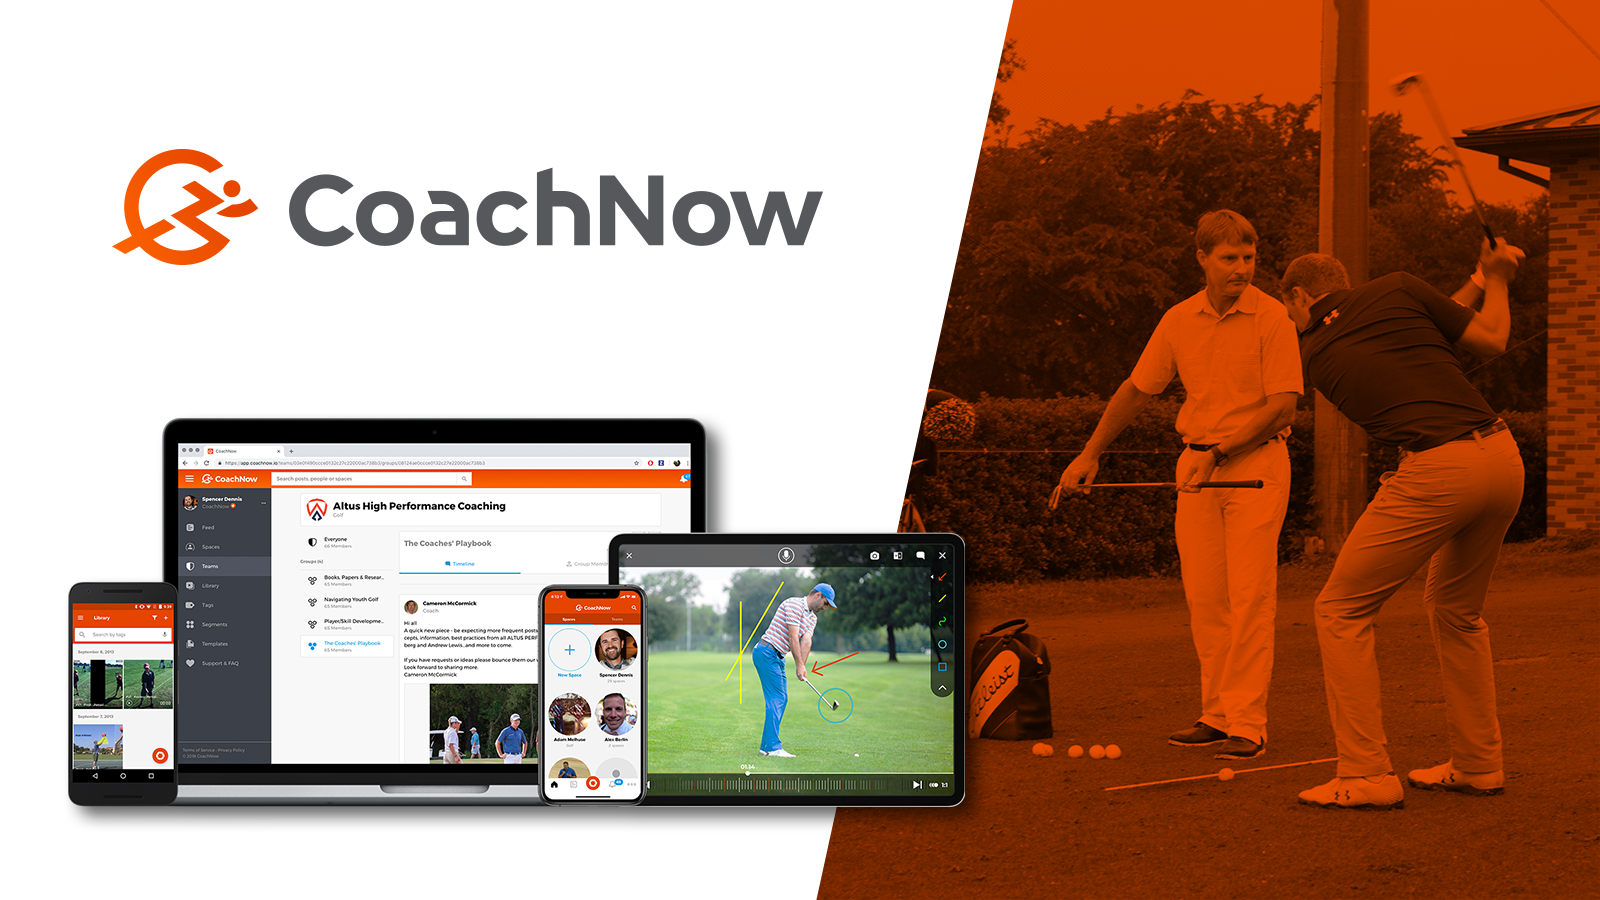 Brad Pluth's Golf Achievement CoachNow App